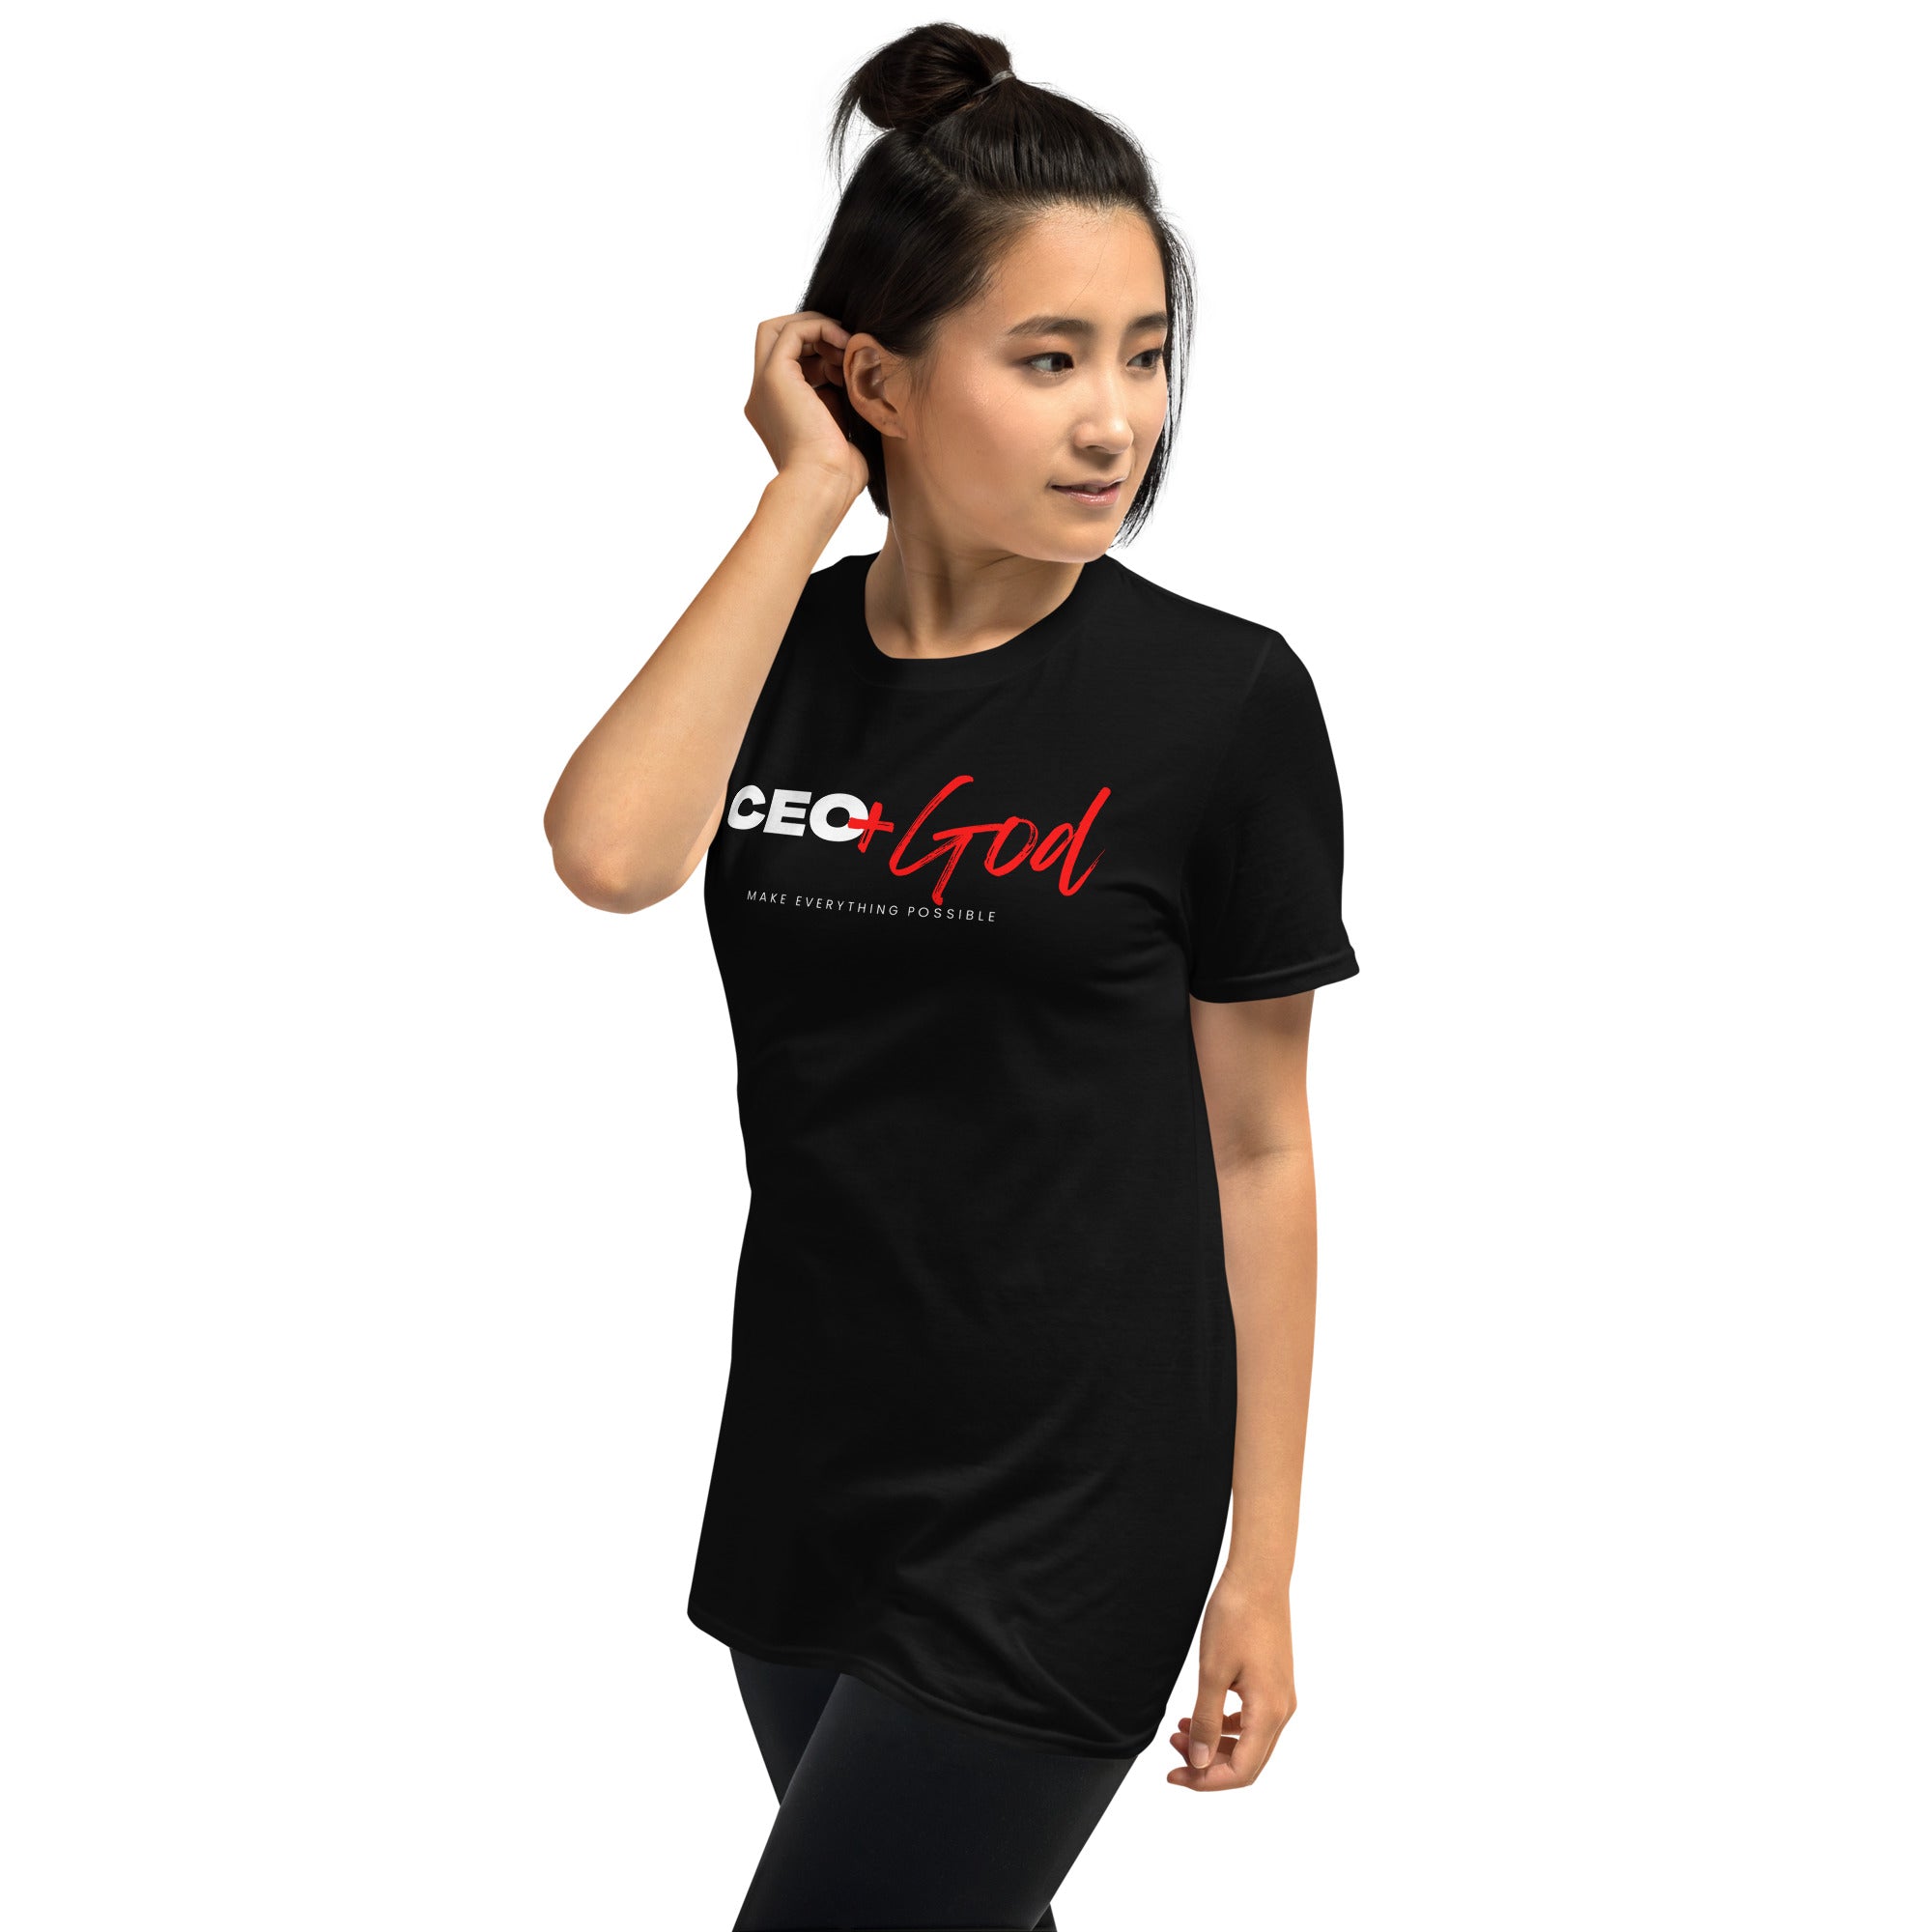 Girl + Goals "CEO + God" Unisex T-Shirt - Black